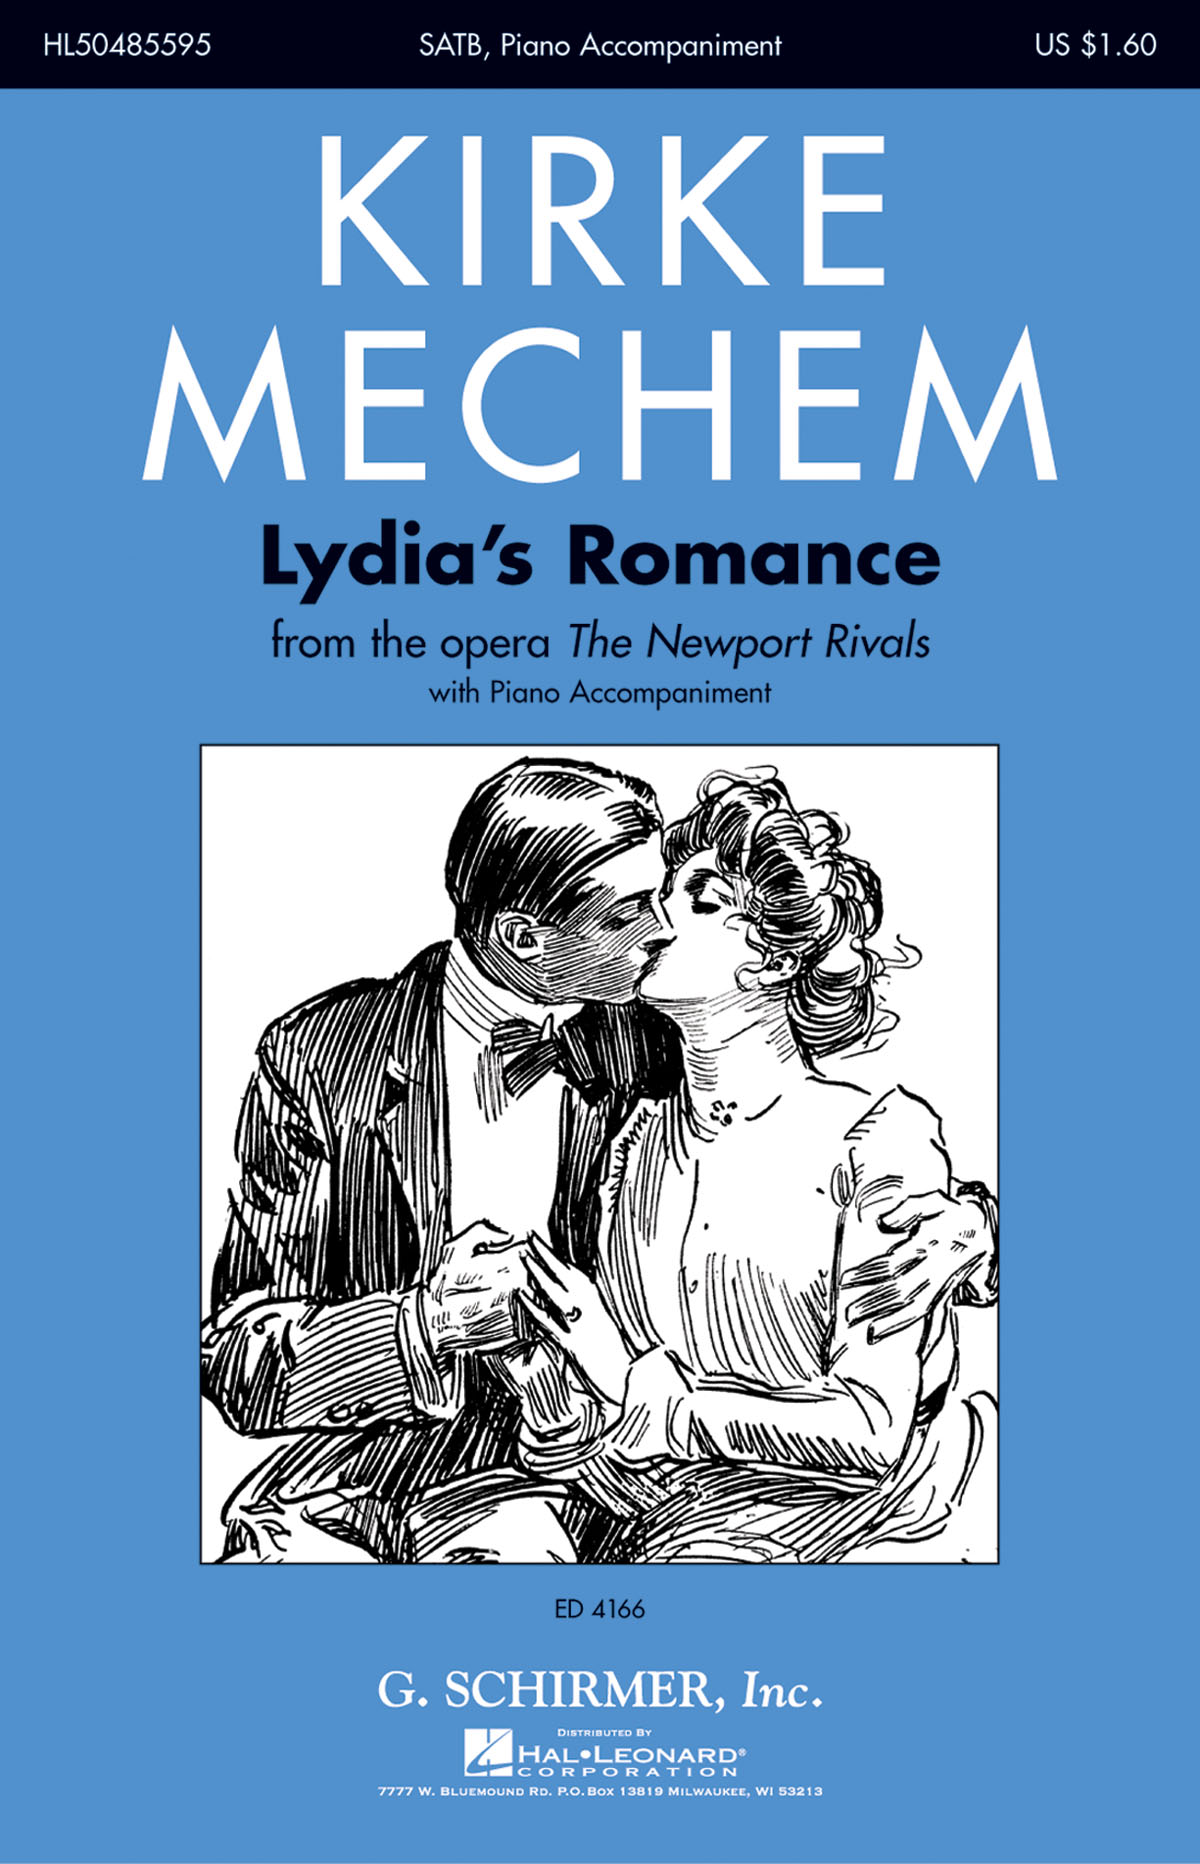 Kirke Mechem: Lydia's Romance